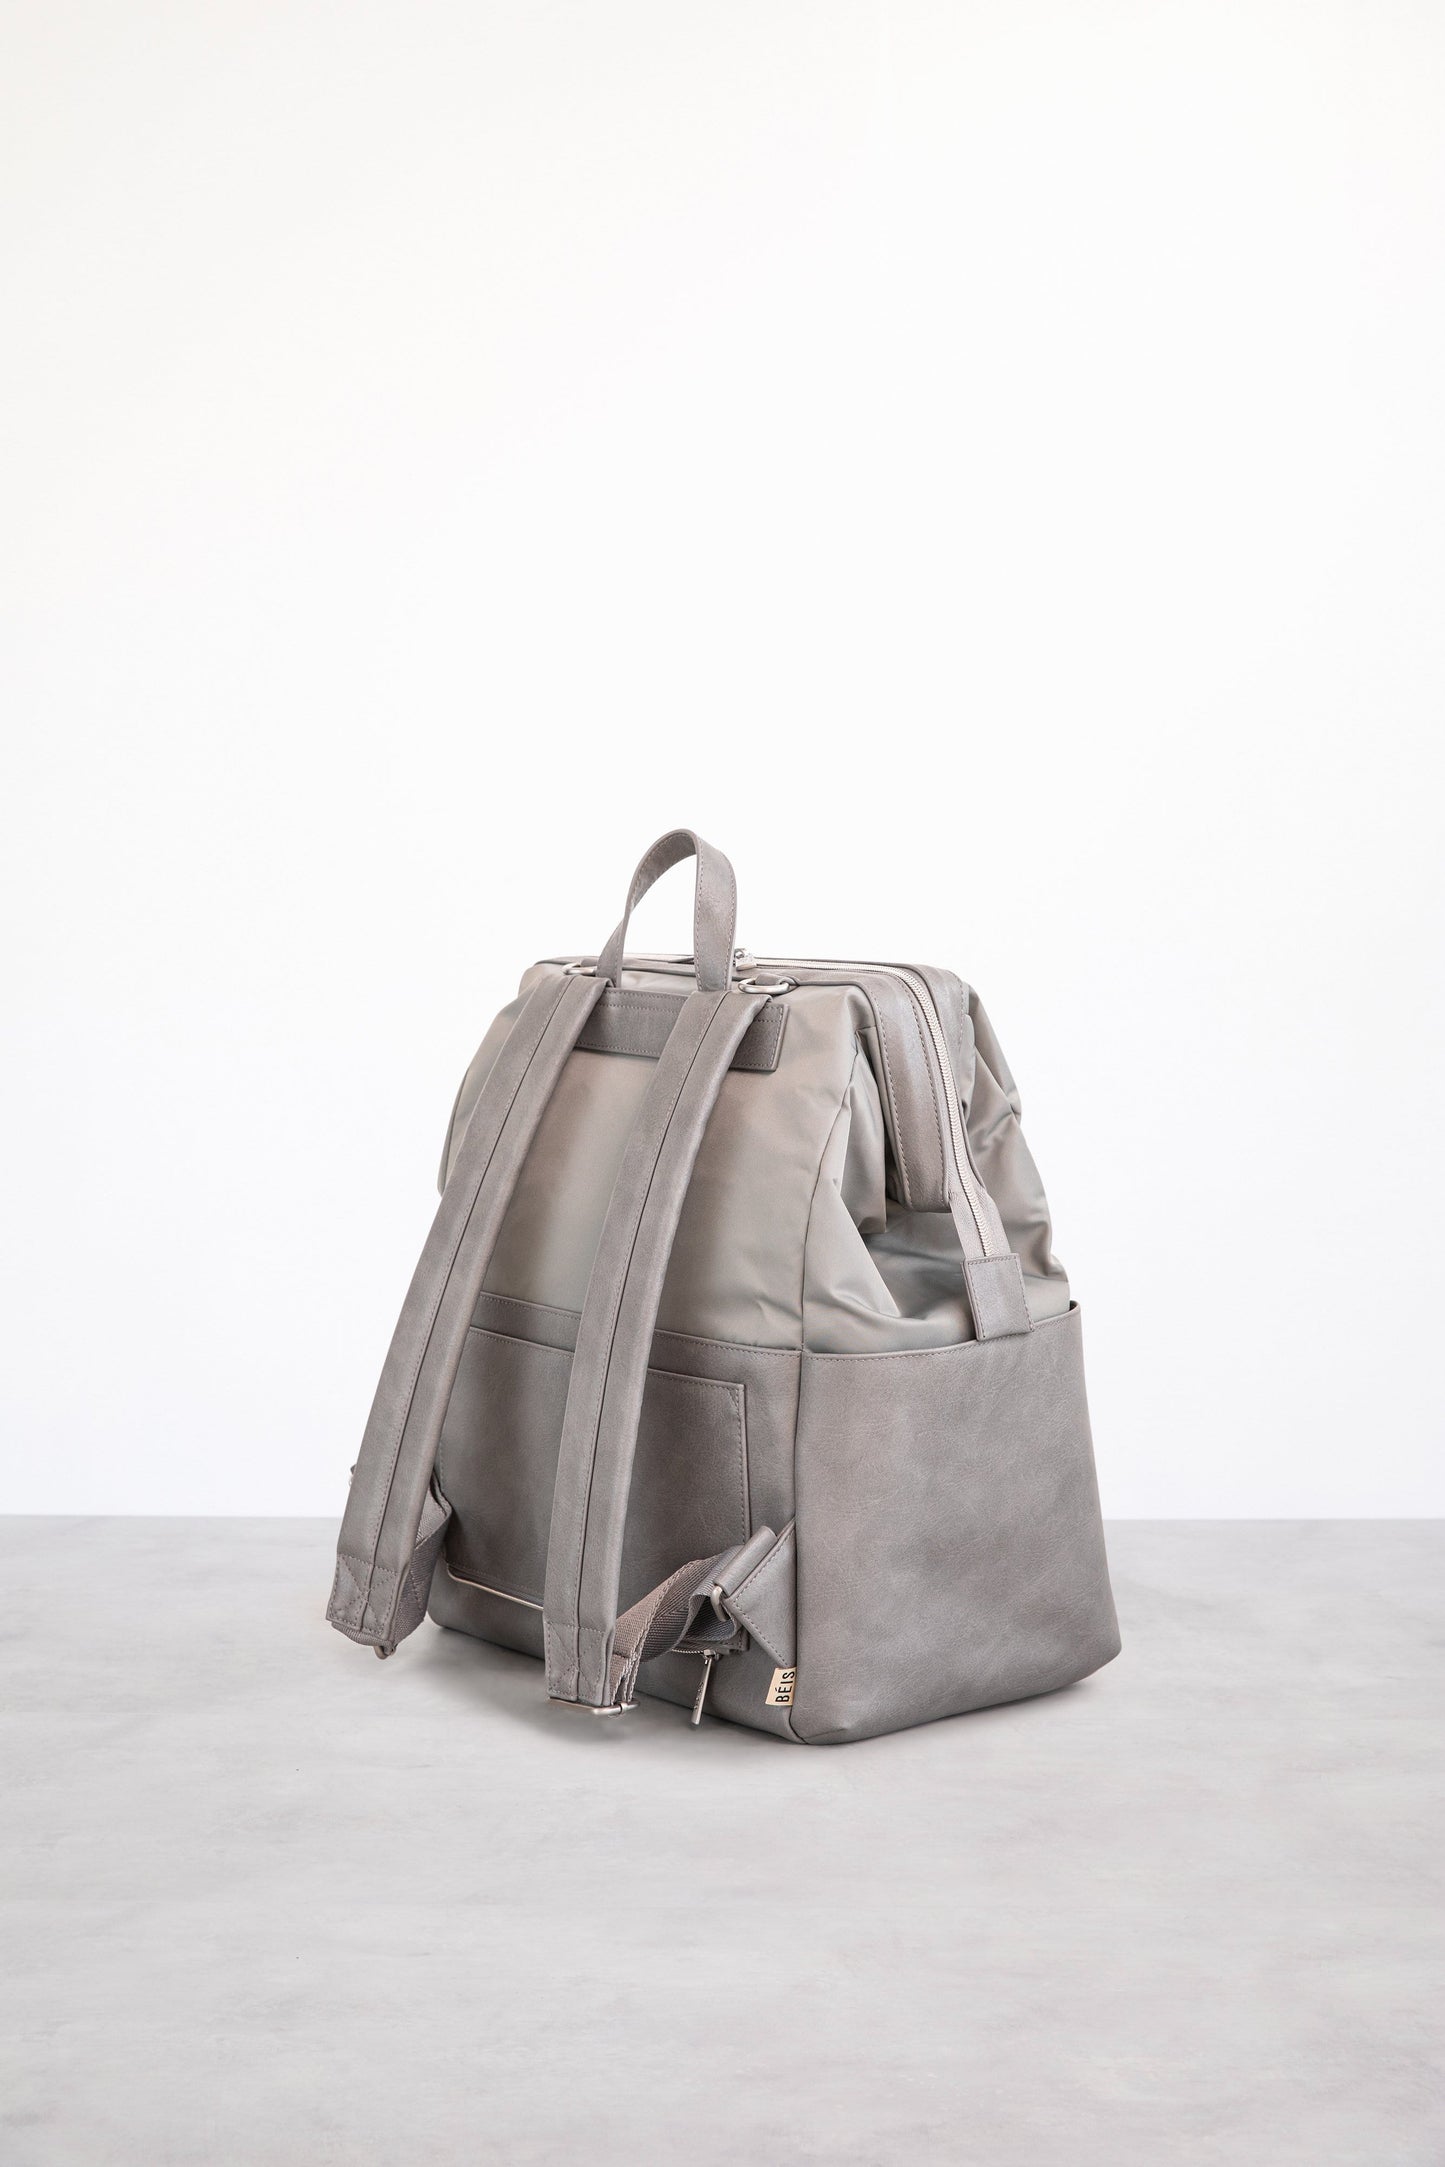 The Backpack Diaper Bag in Grey